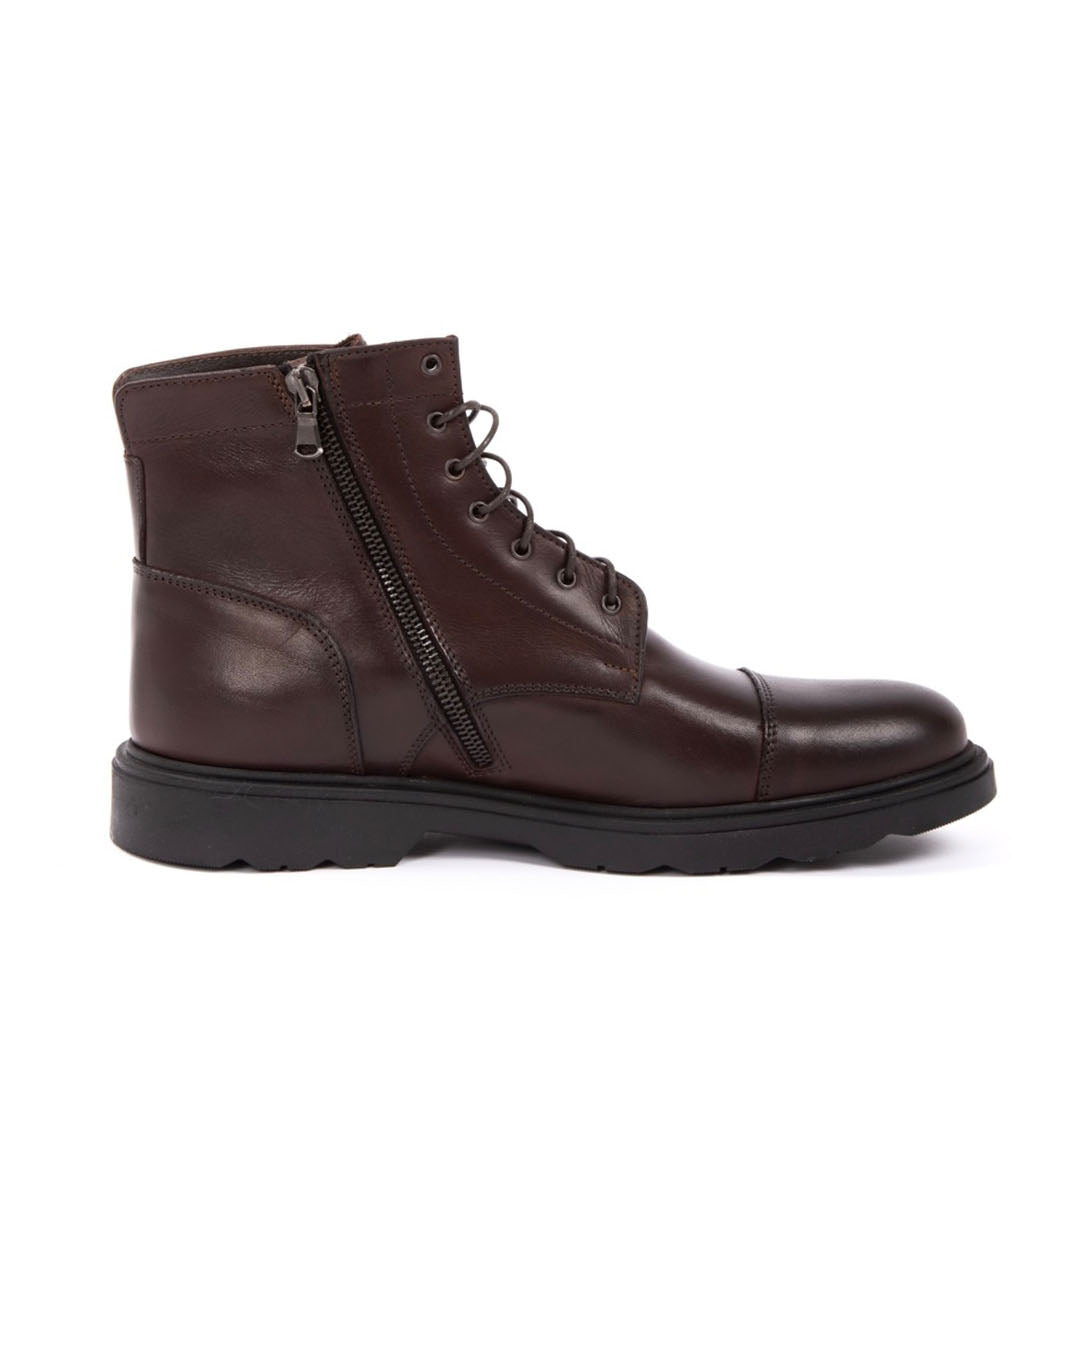 Z02 - dark brown leather combat boots with zip